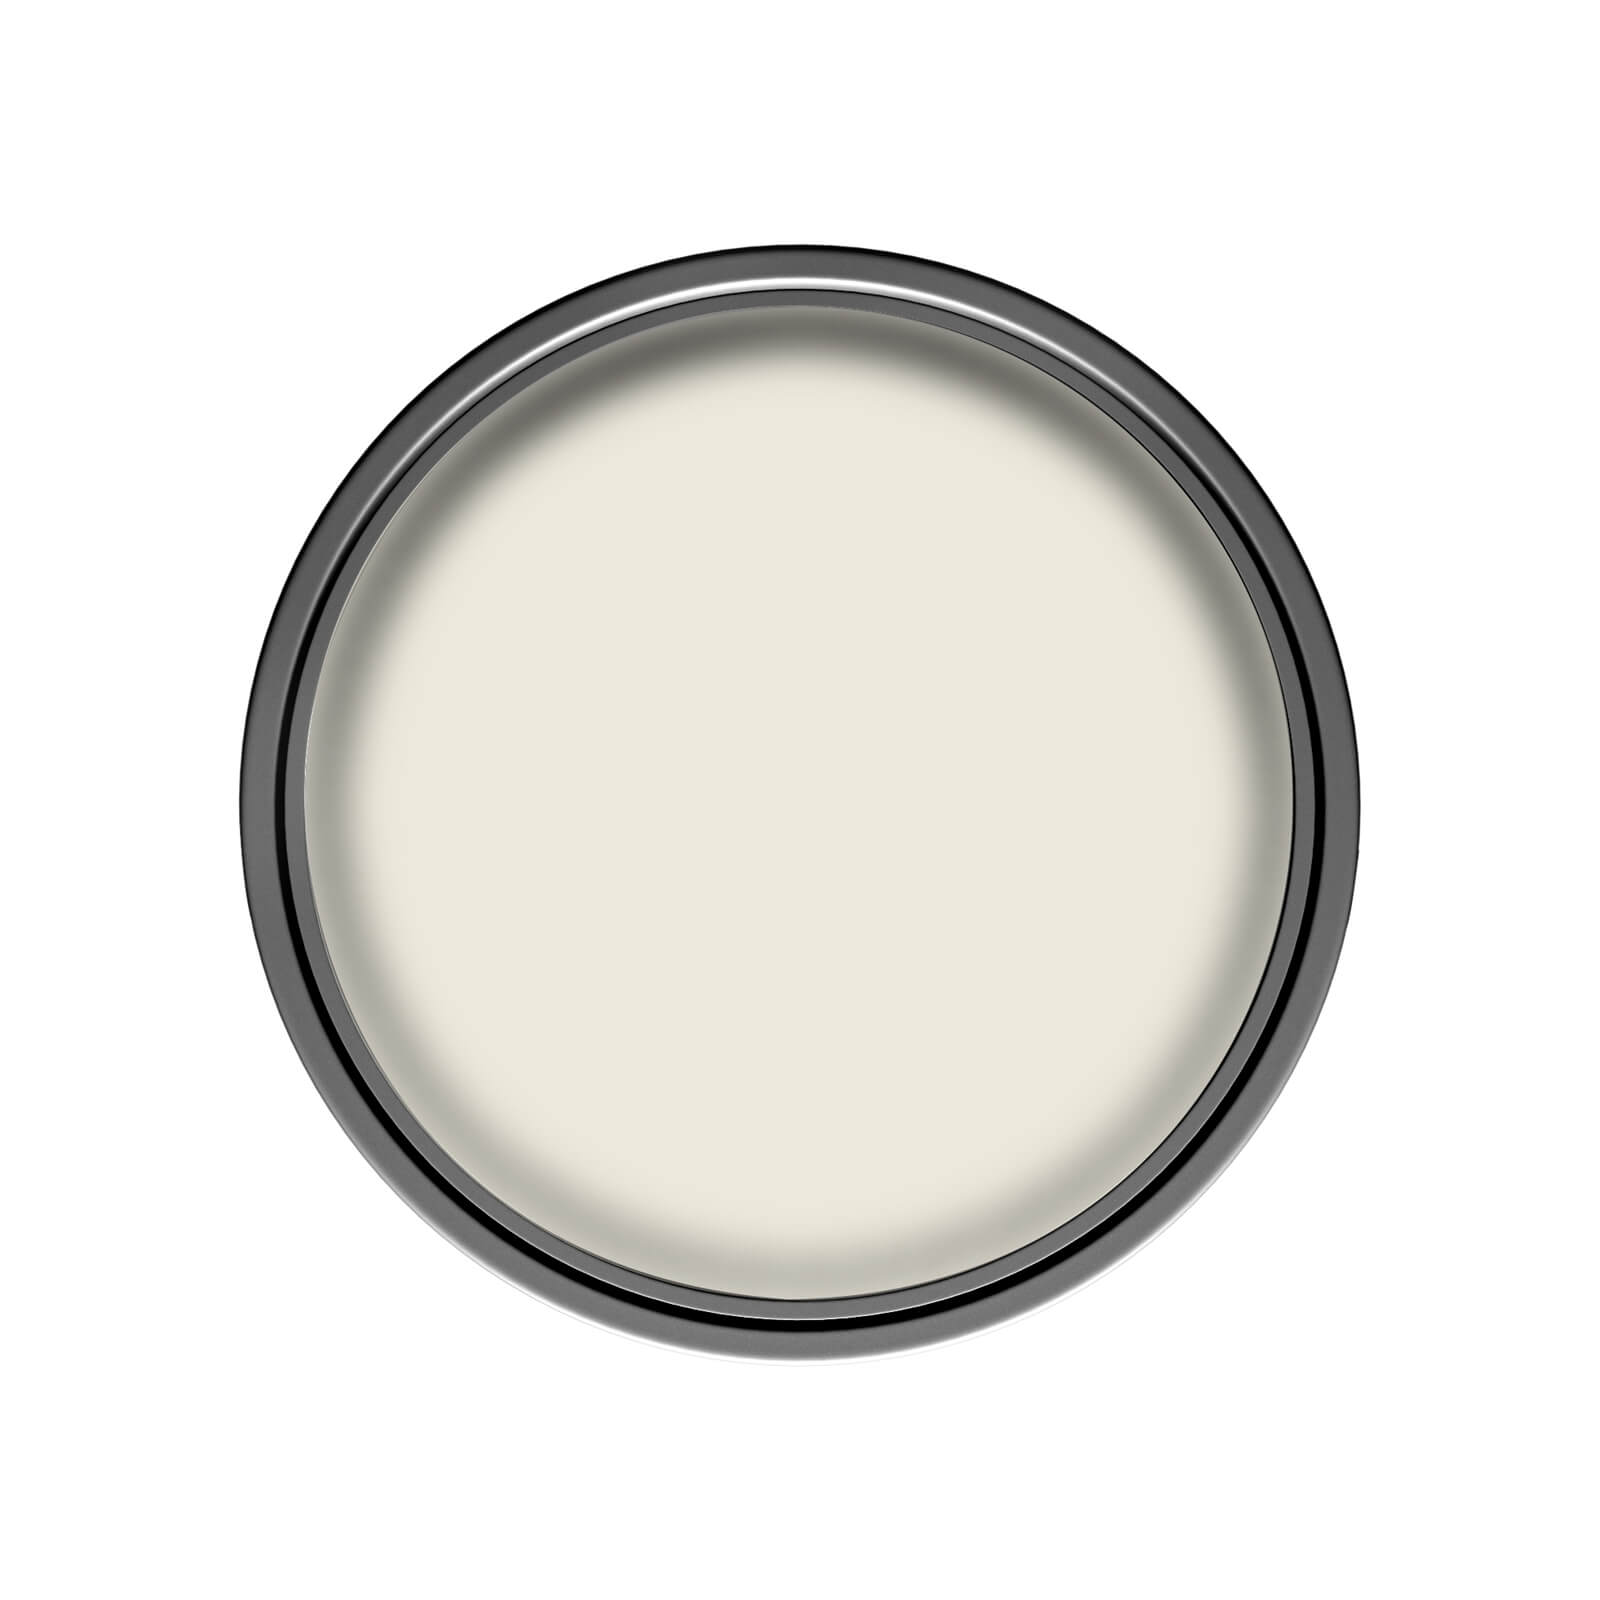 Dulux Matt Emulsion Paint Almond White - 2.5L